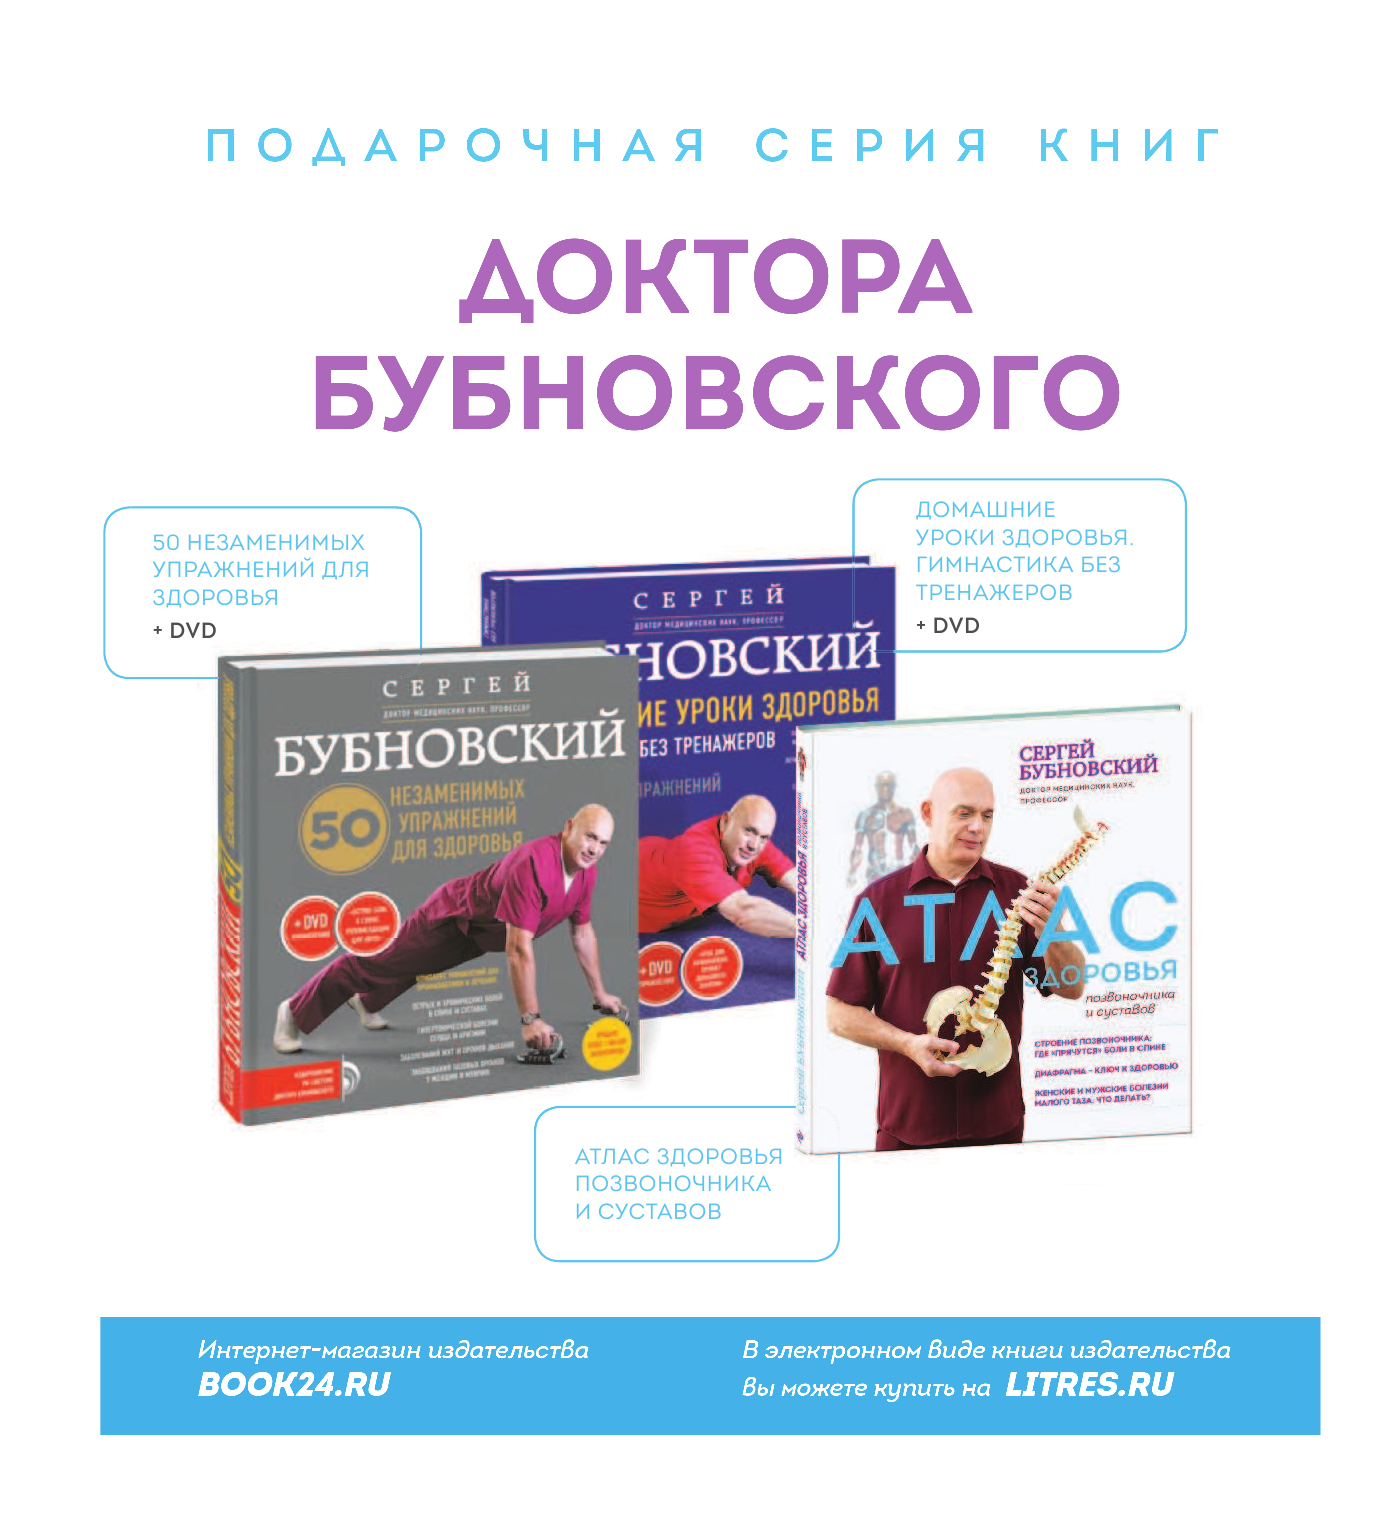 Уроки женского здоровья + DVD (Бубновский Сергей Михайлович) - фото №4